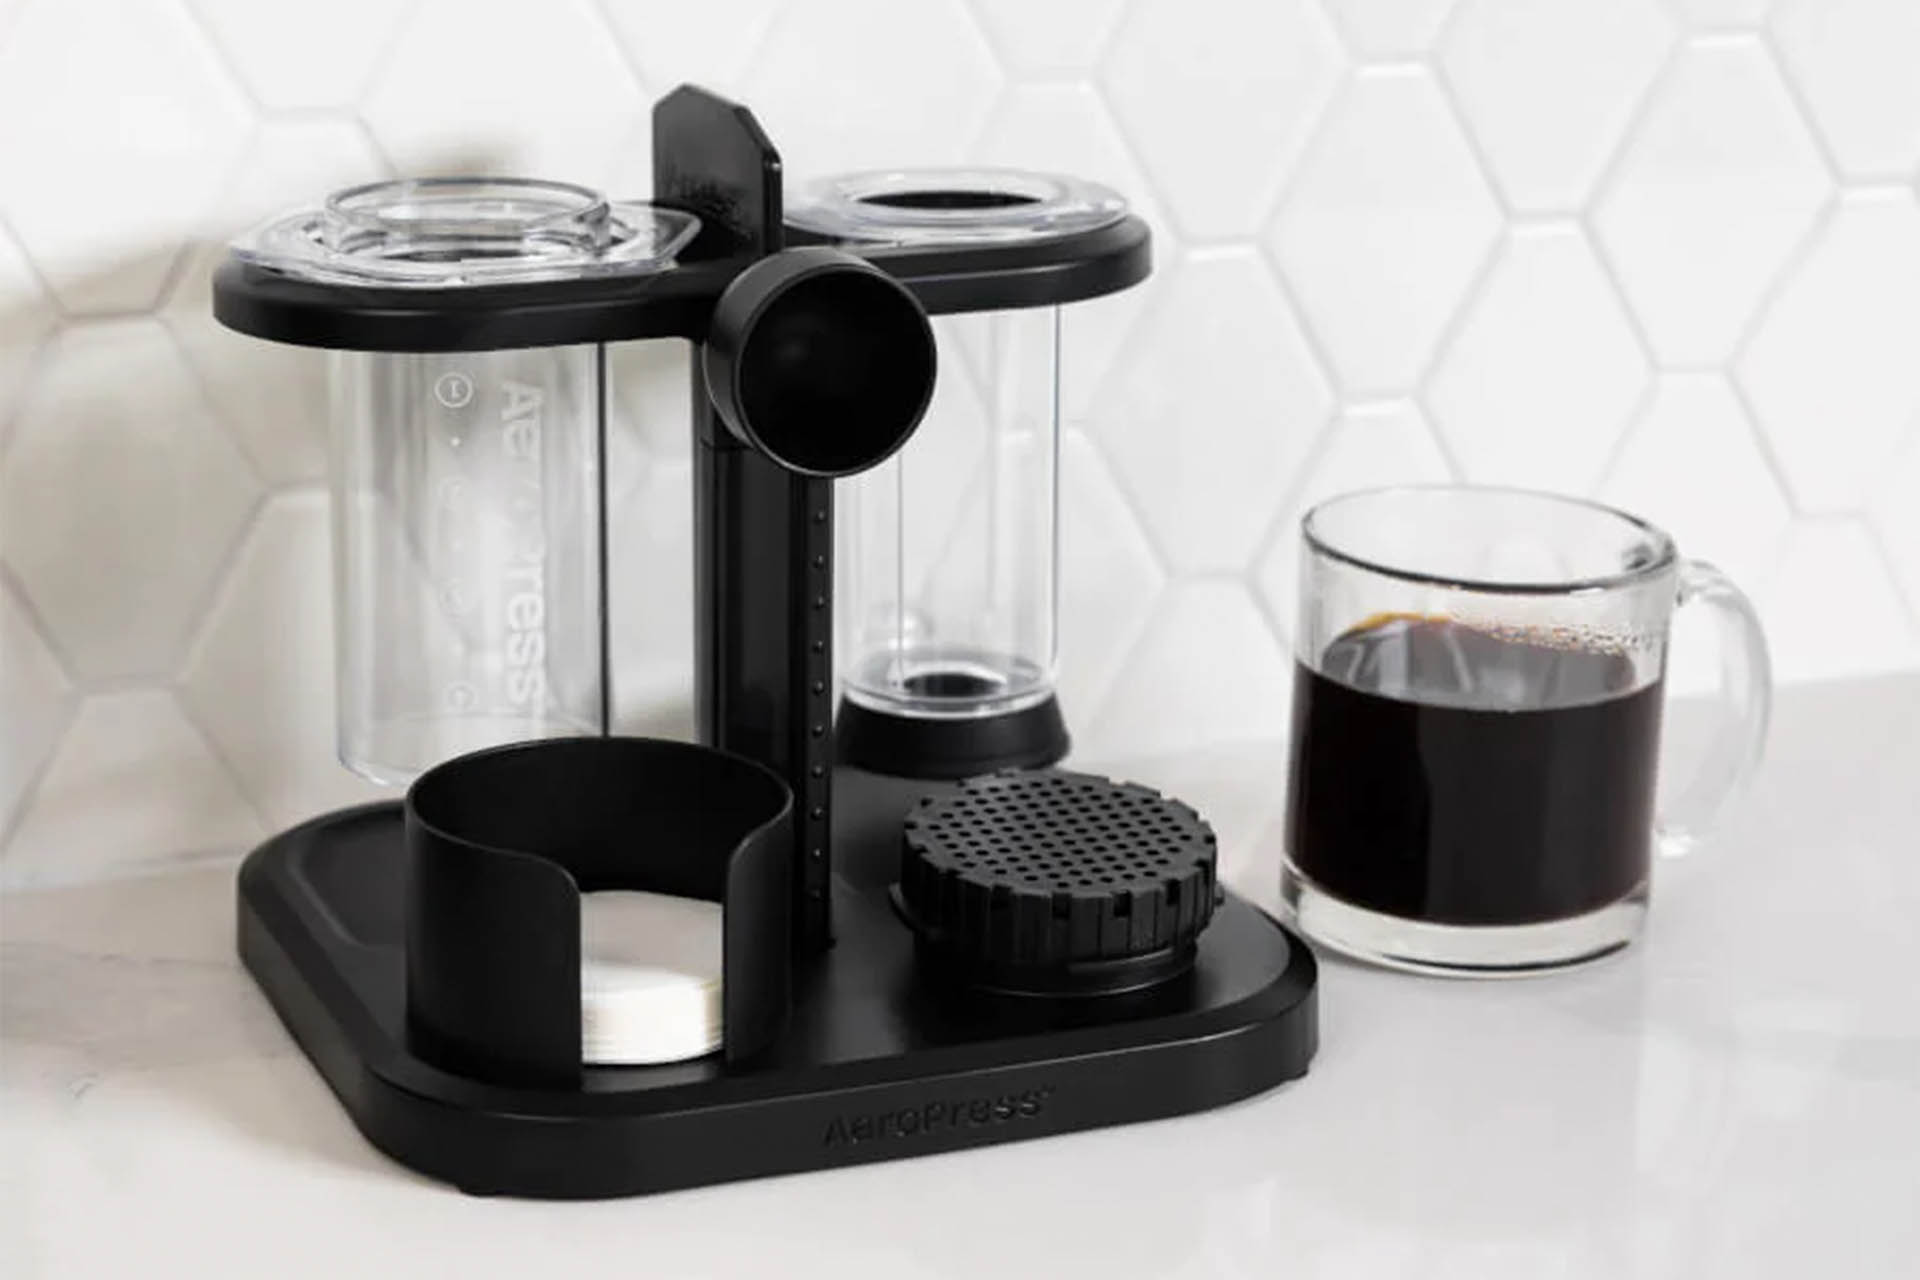 AeroPress Launches Coffee Maker Accessories